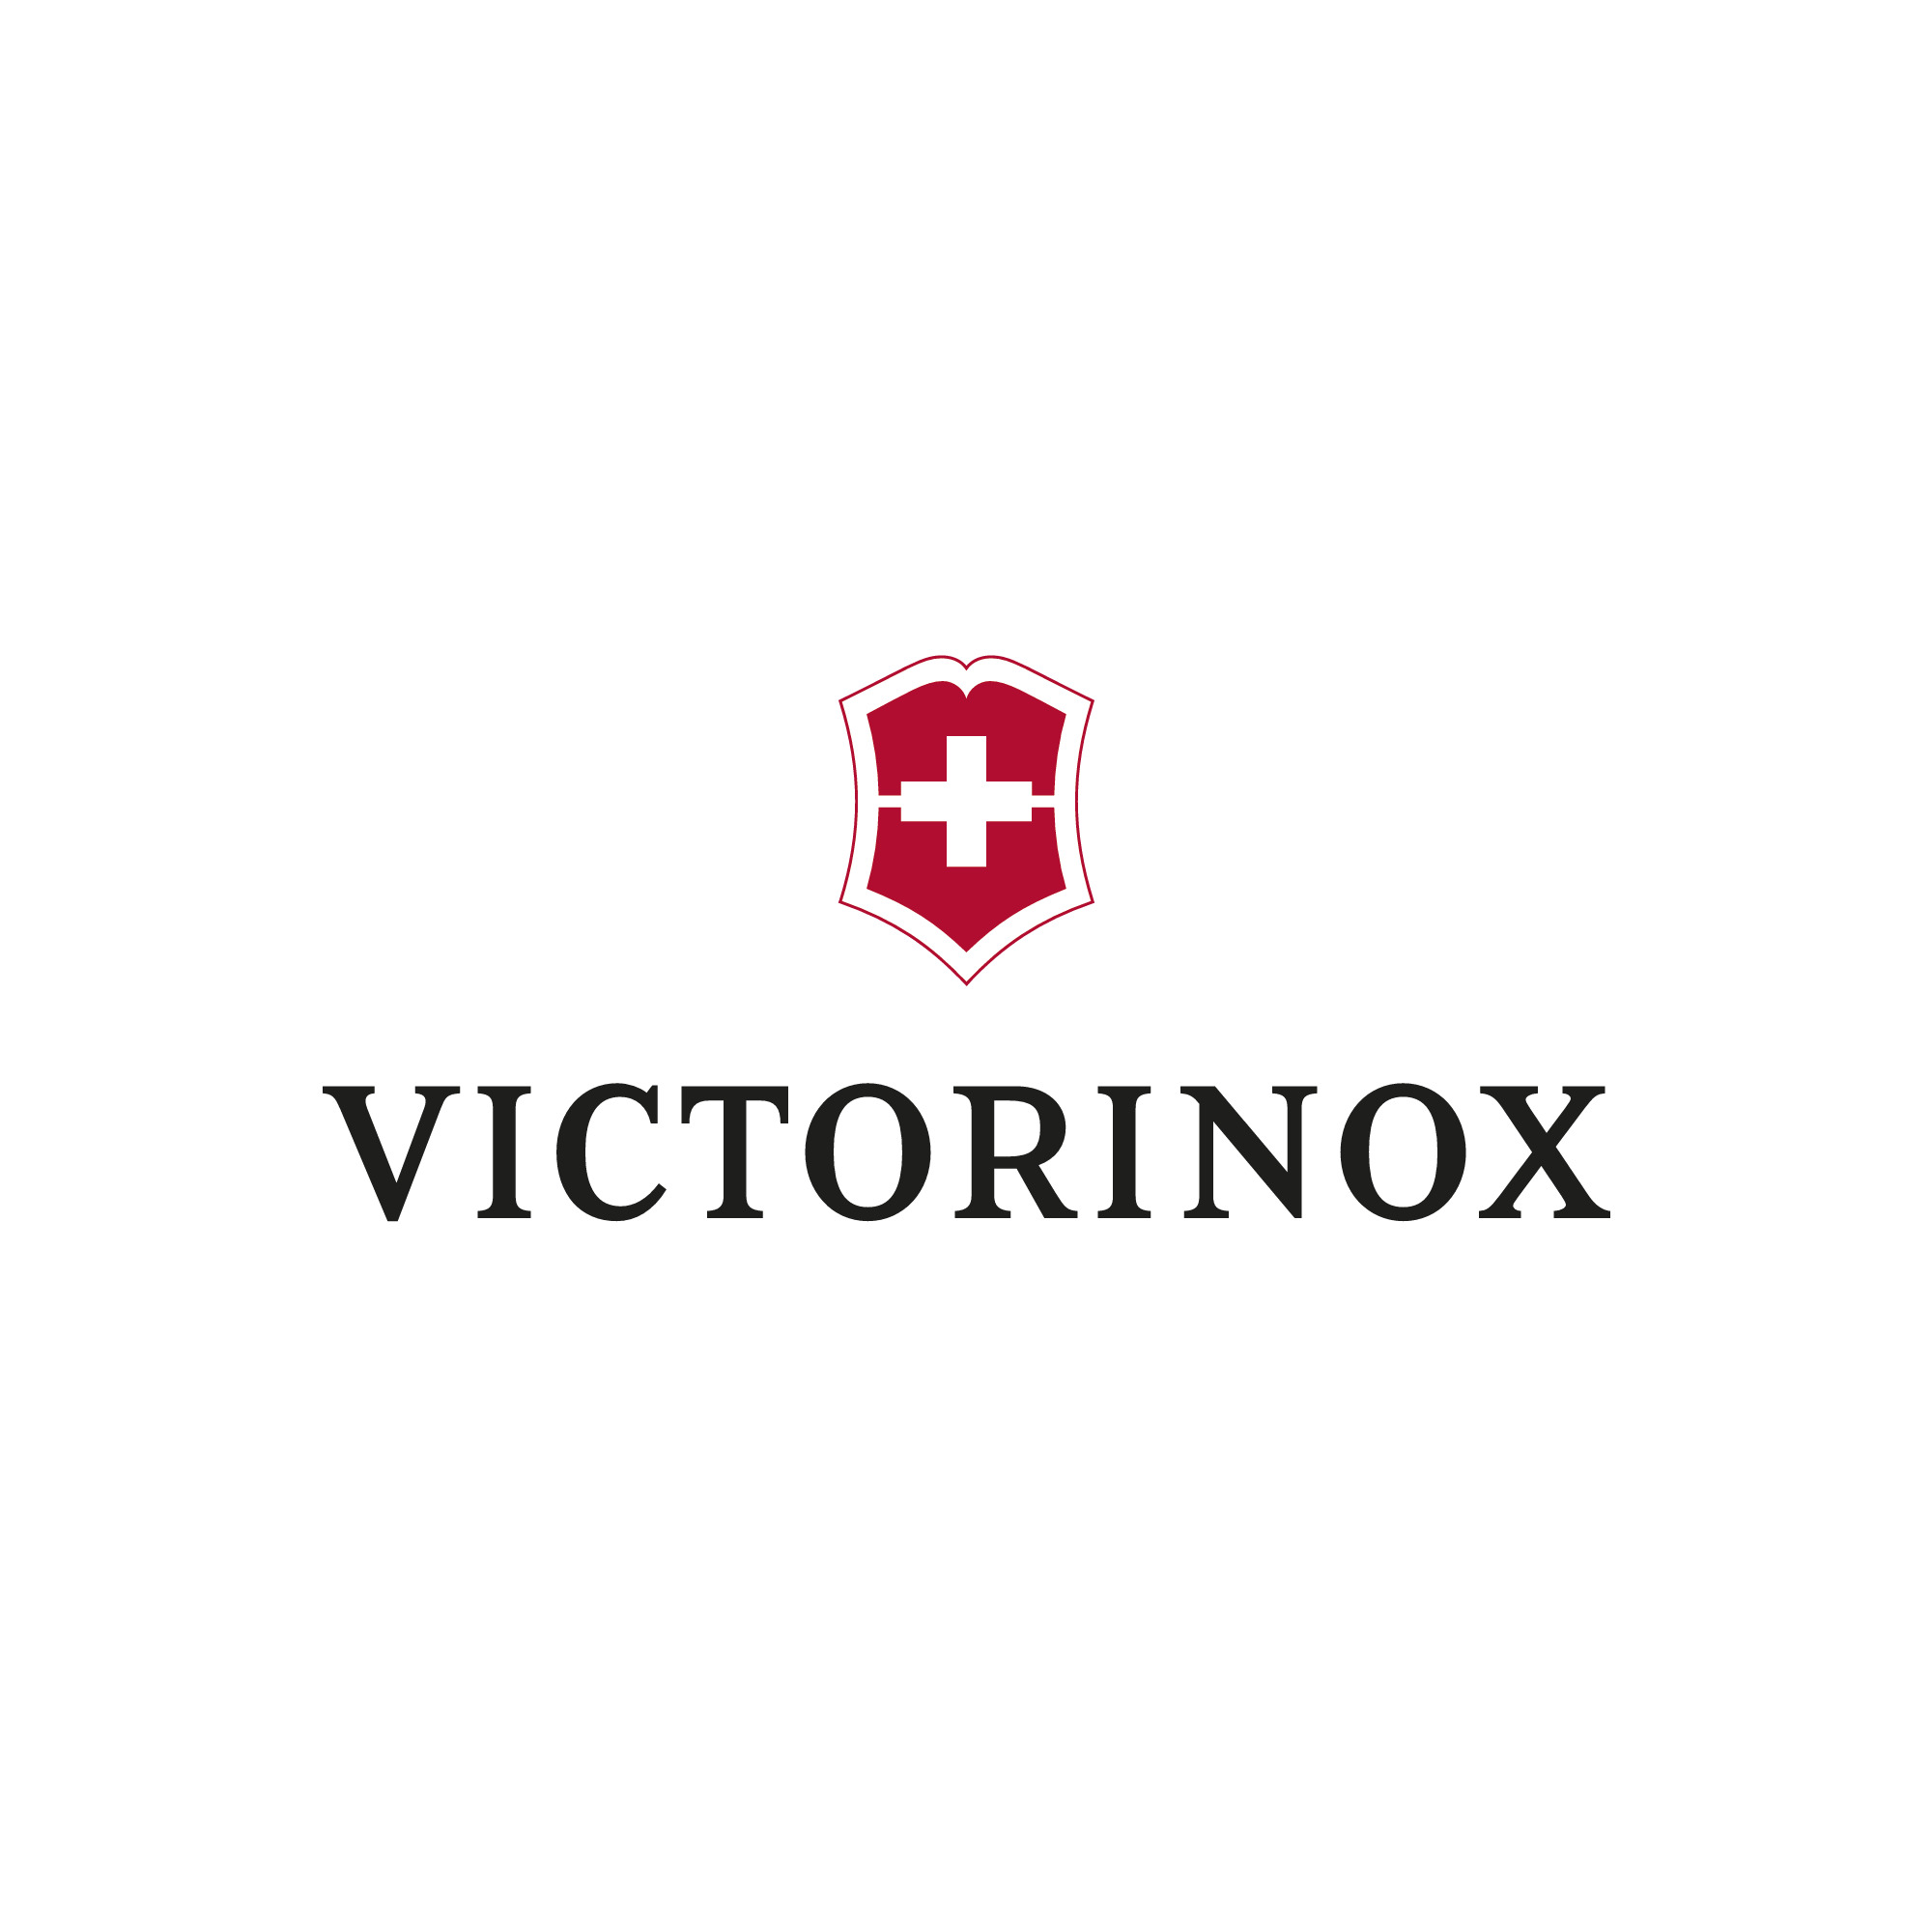 Victorinox AG